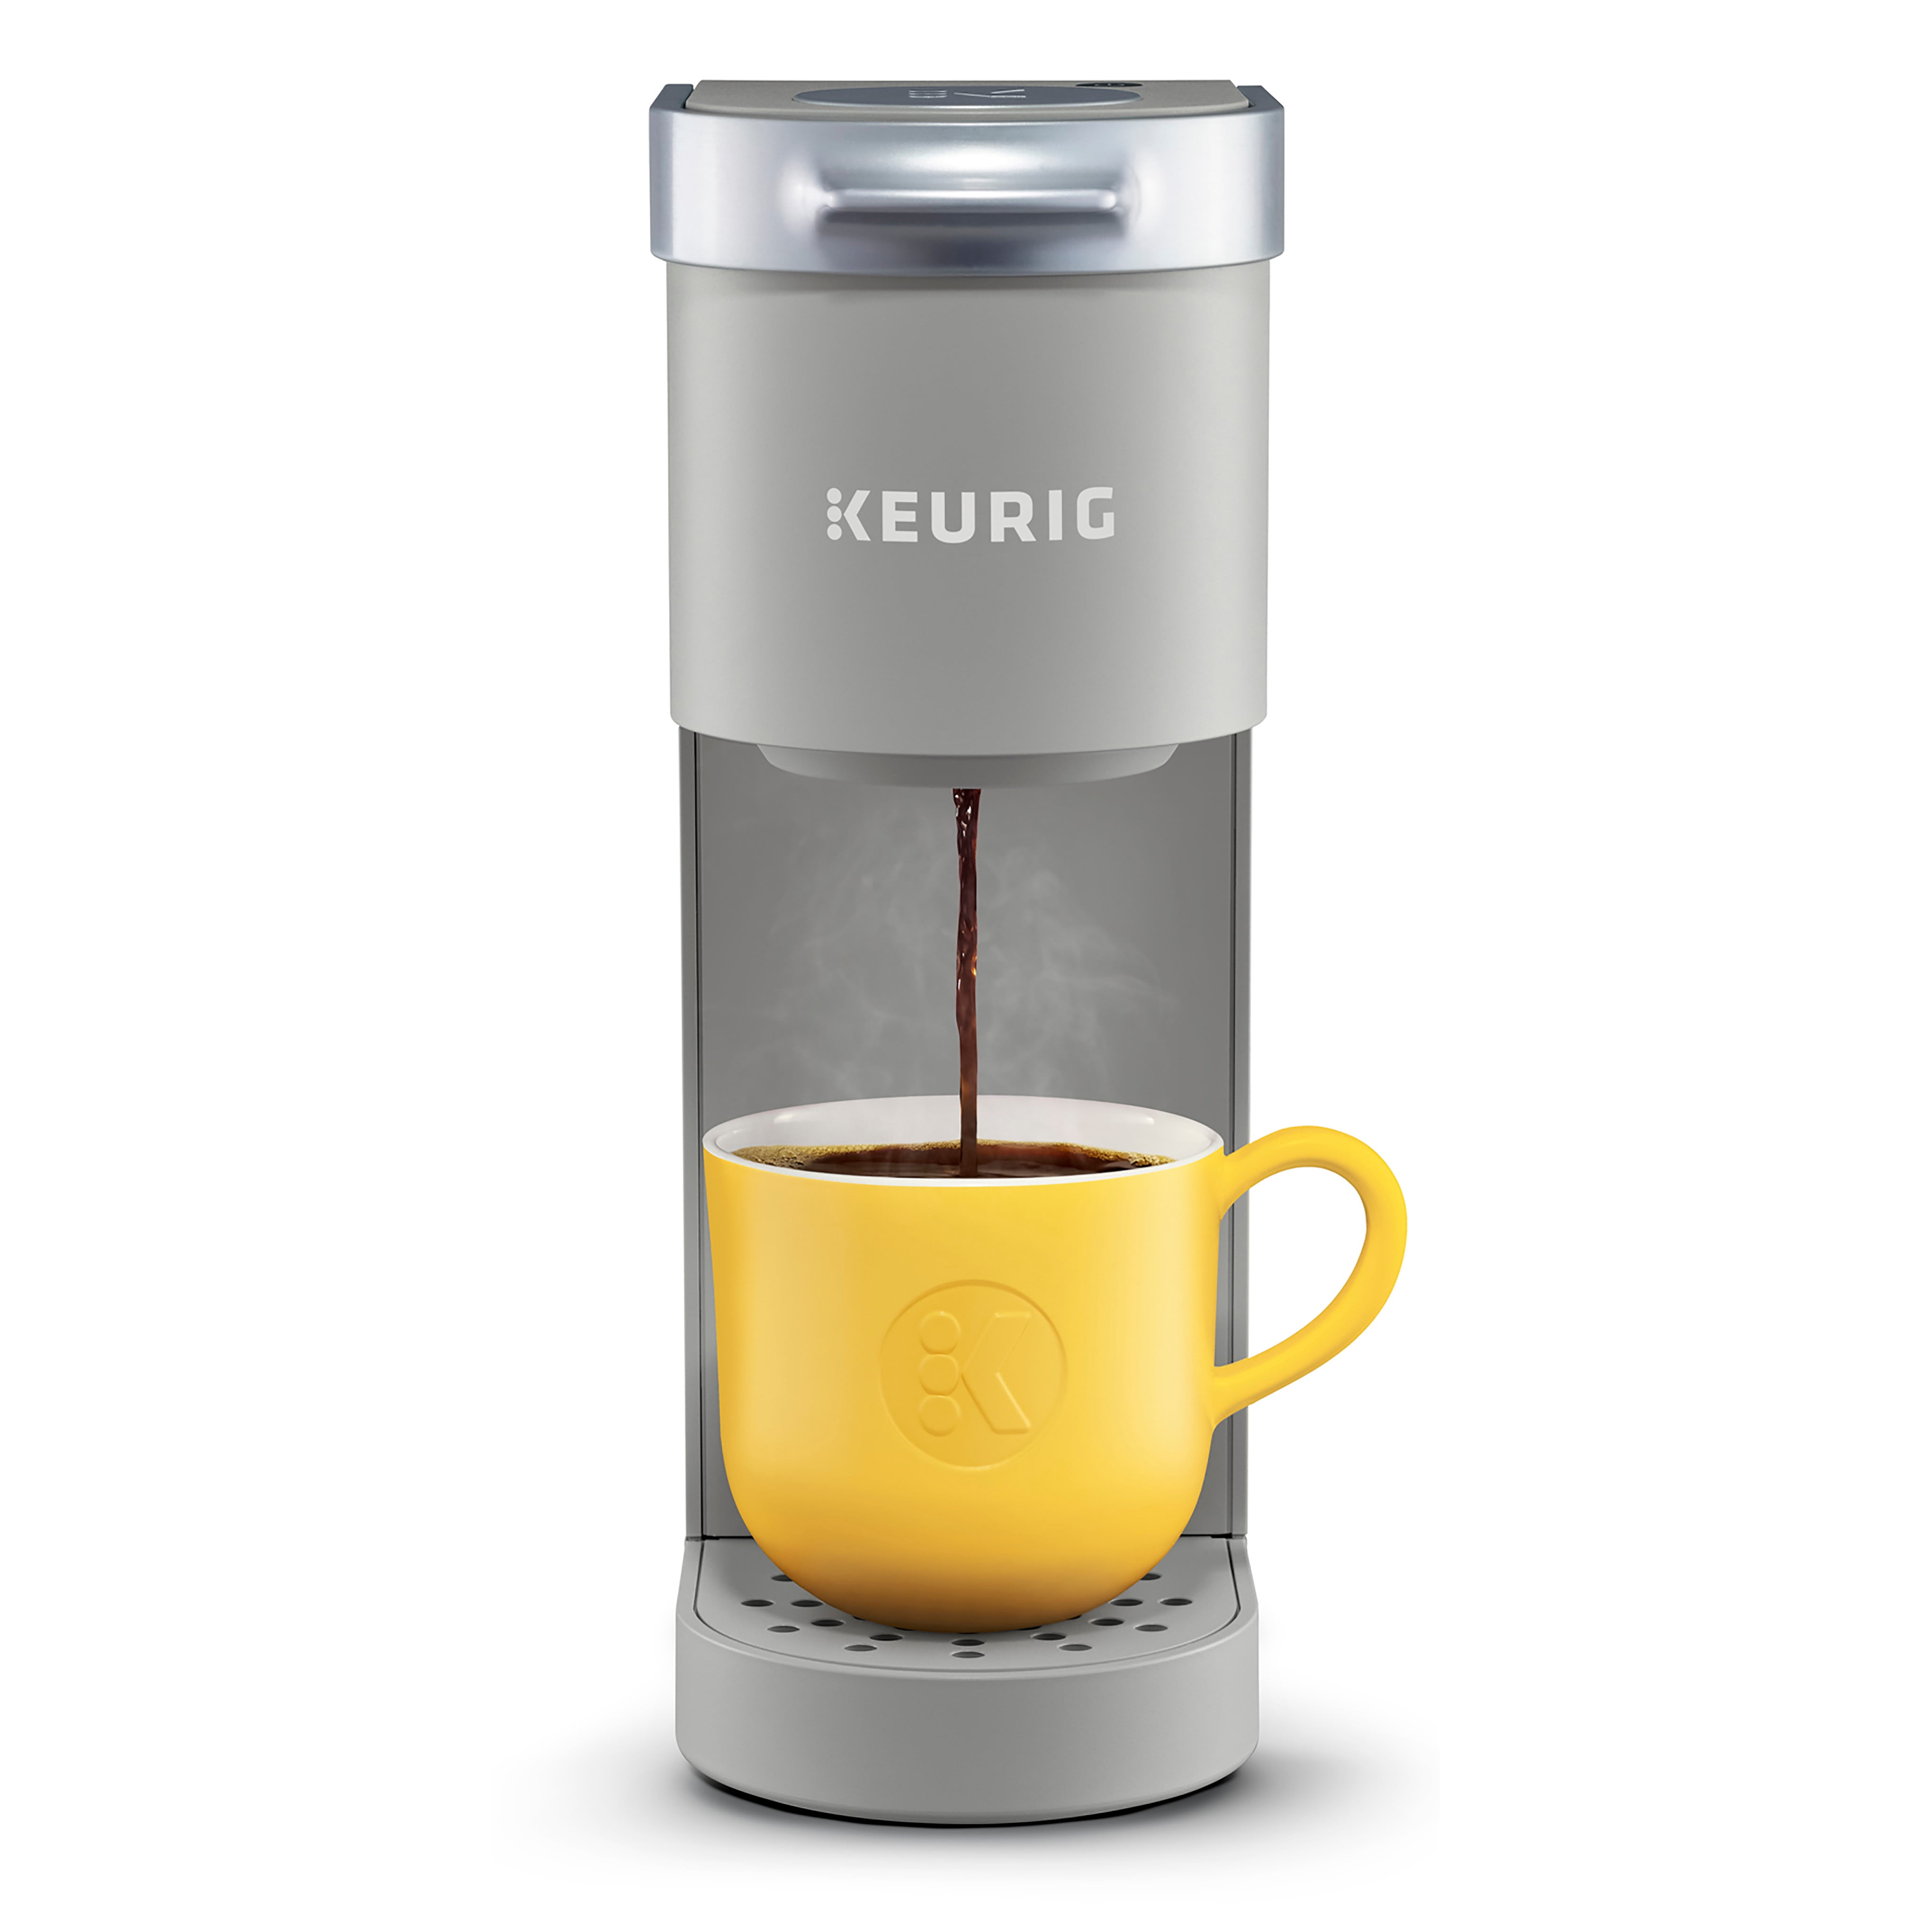 Keurig K-Mini Single Serve Coffee Maker, Studio Gray